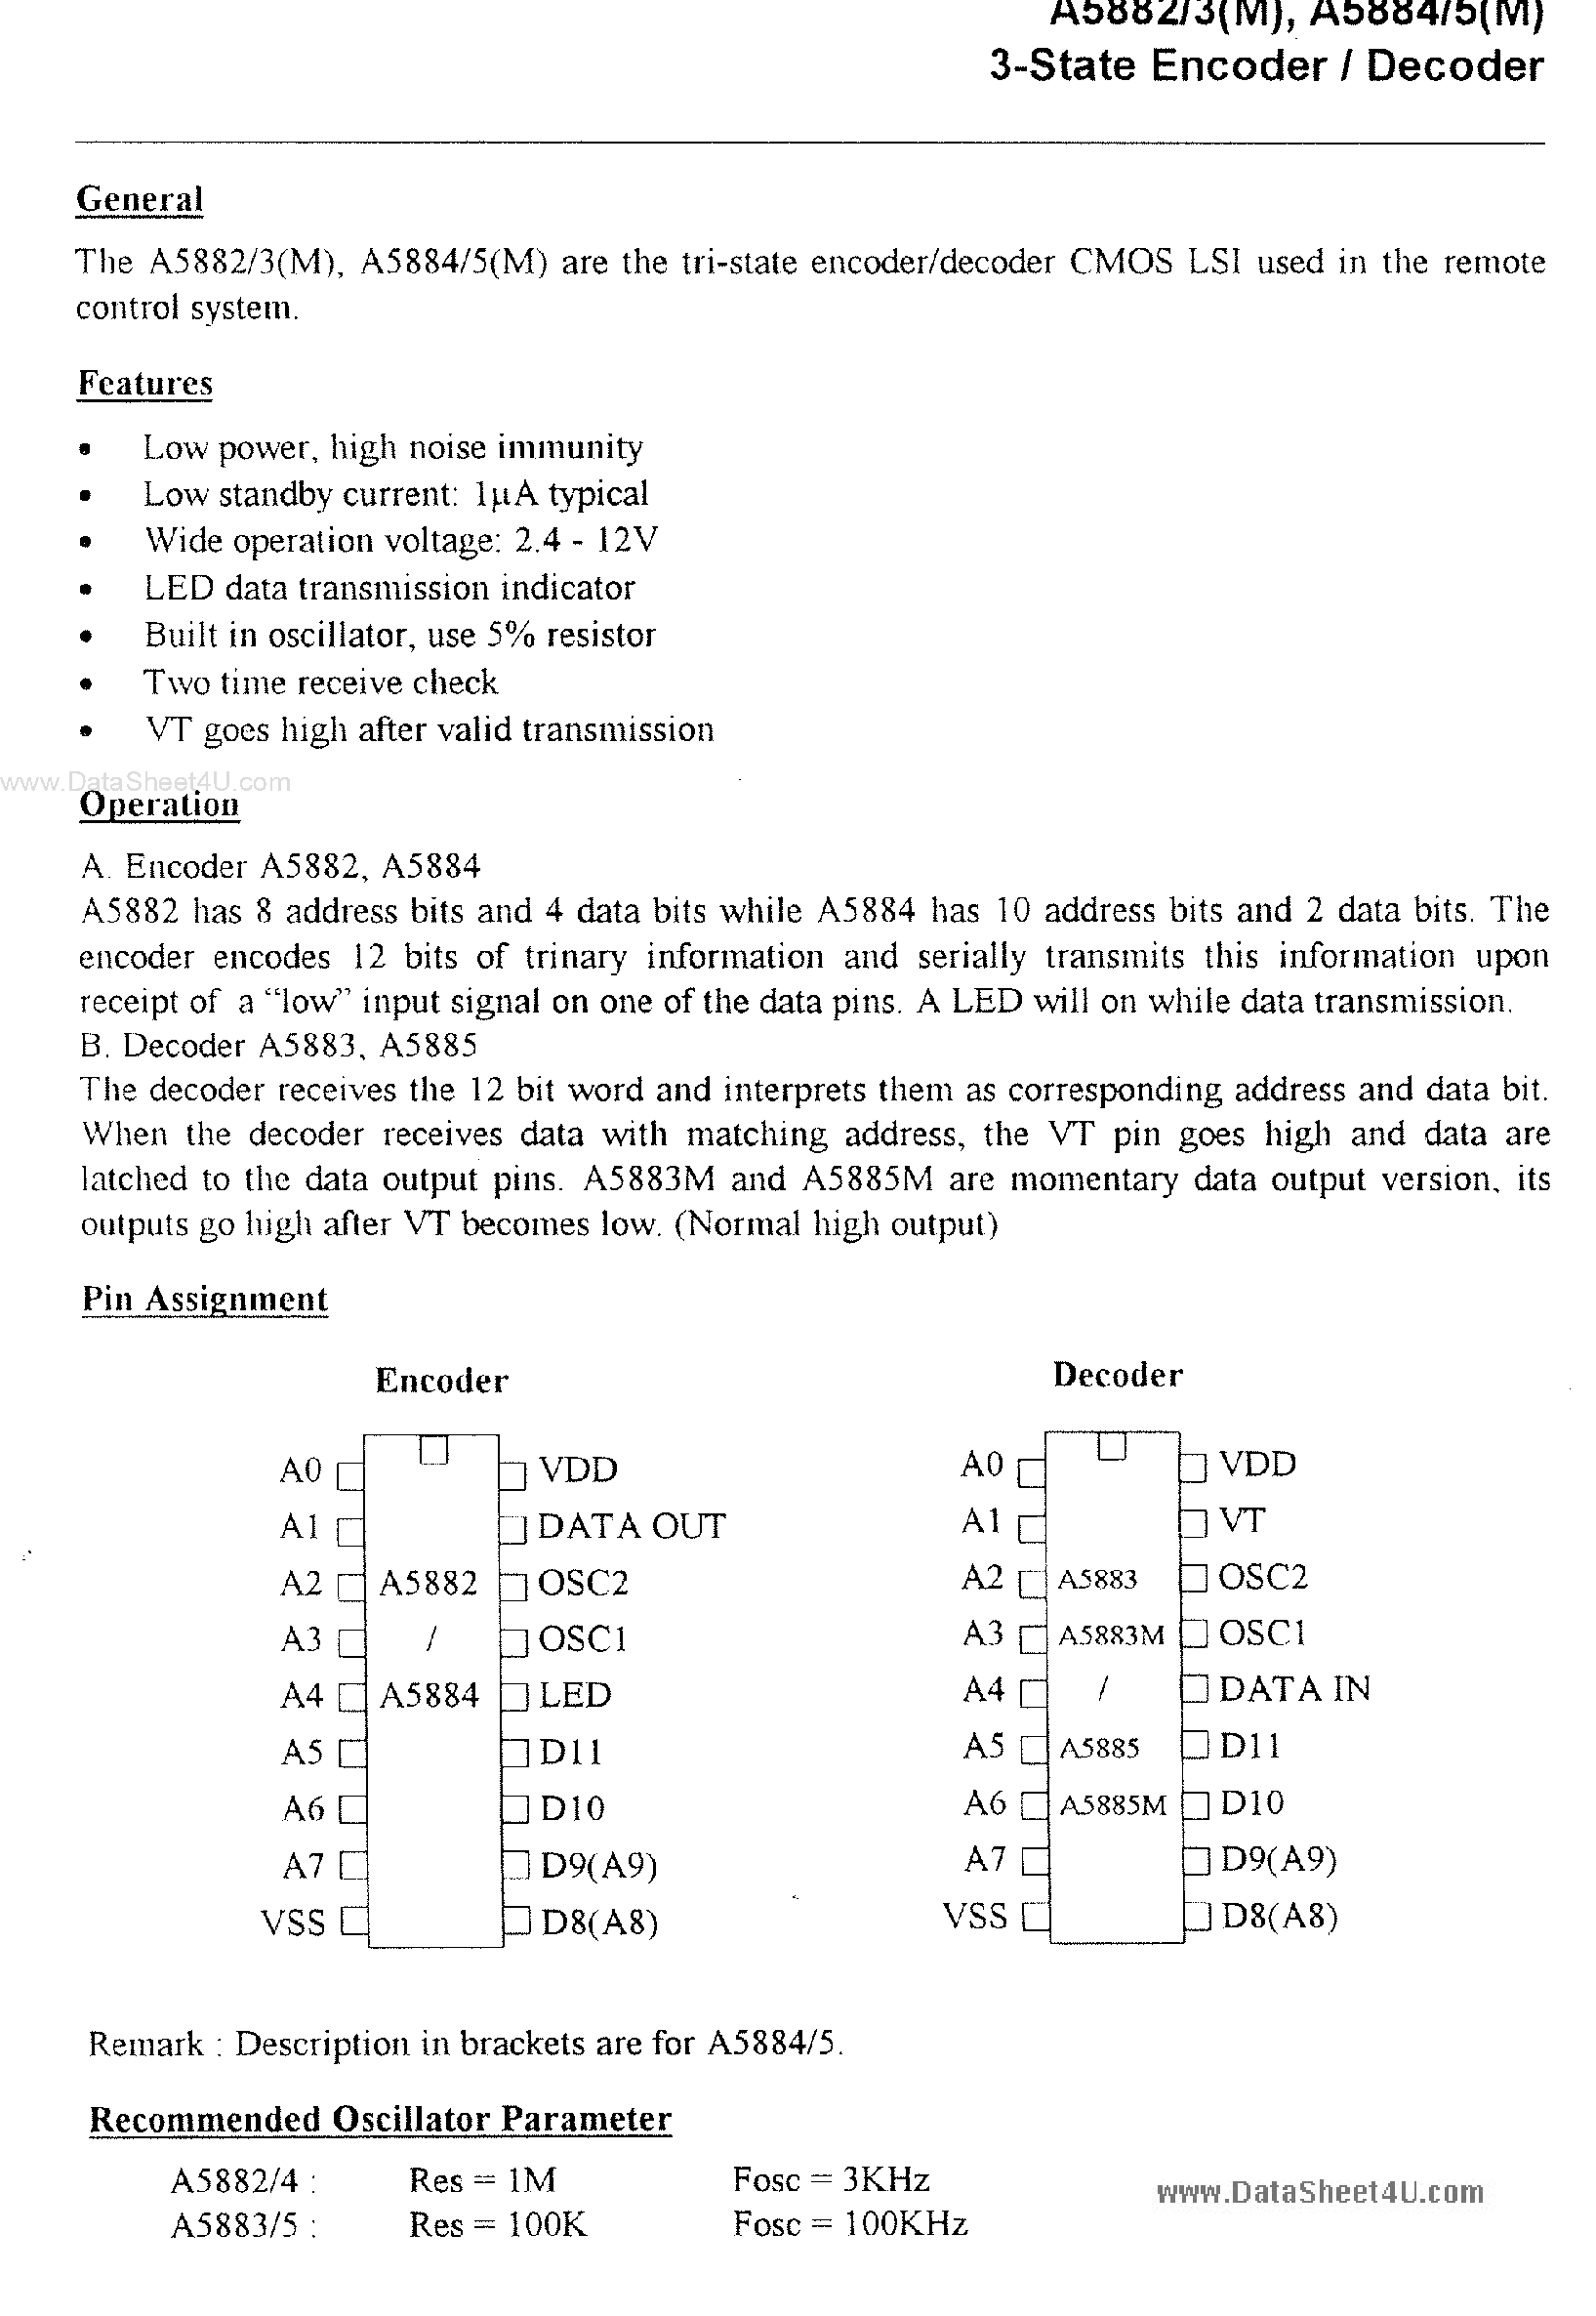 Datasheet A5882 - (A5882 - A5885) 3-State Encoder / Decoder page 1